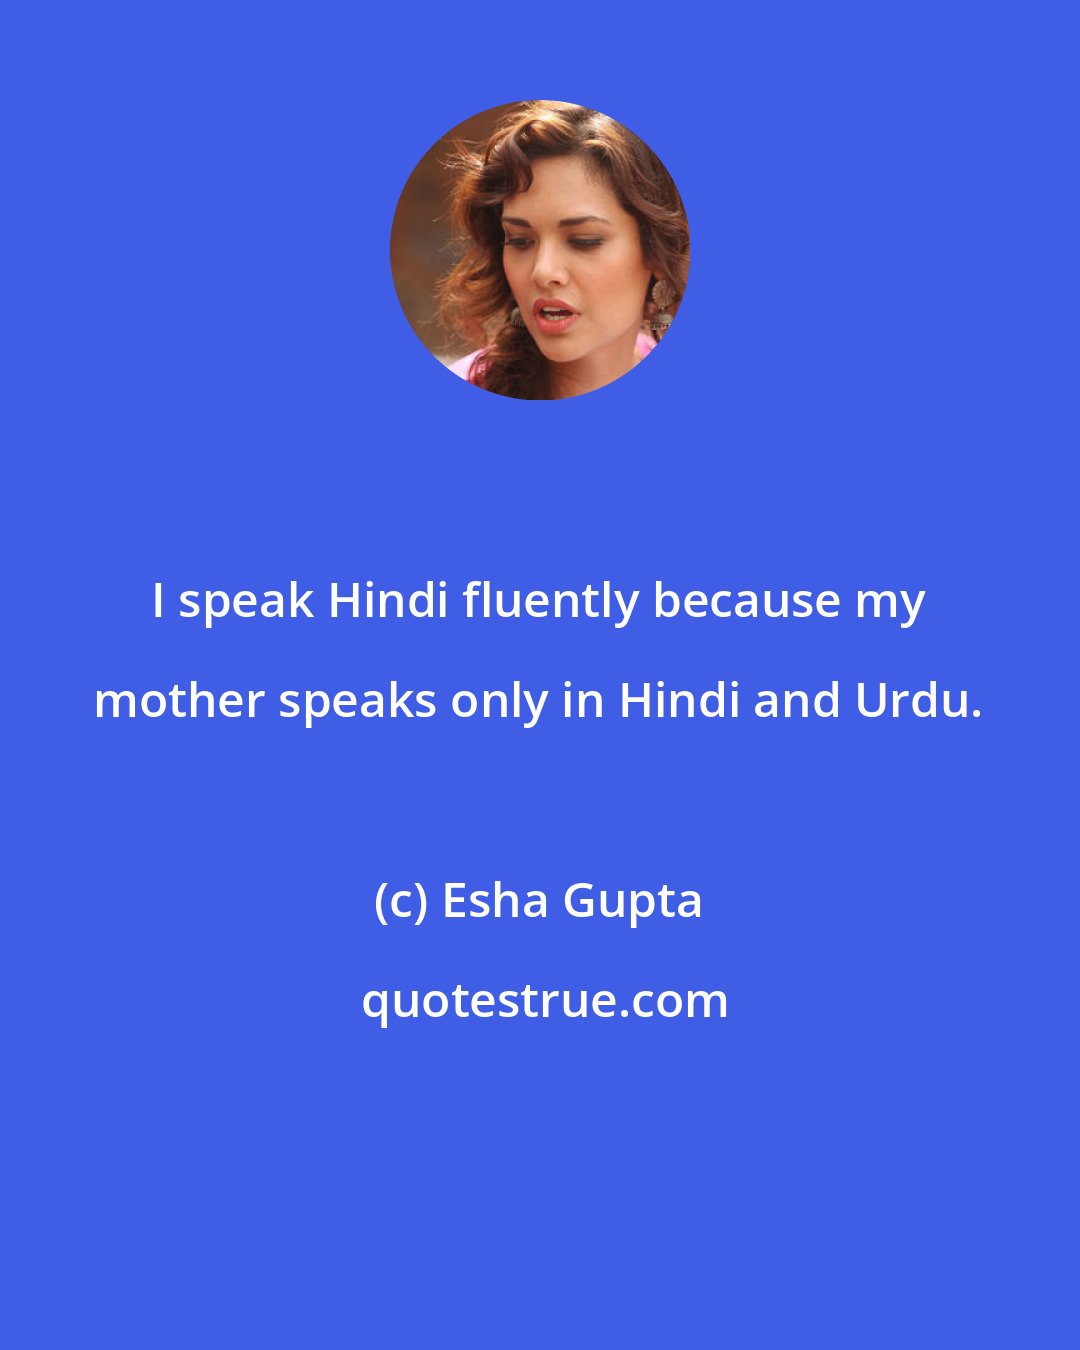 Esha Gupta: I speak Hindi fluently because my mother speaks only in Hindi and Urdu.